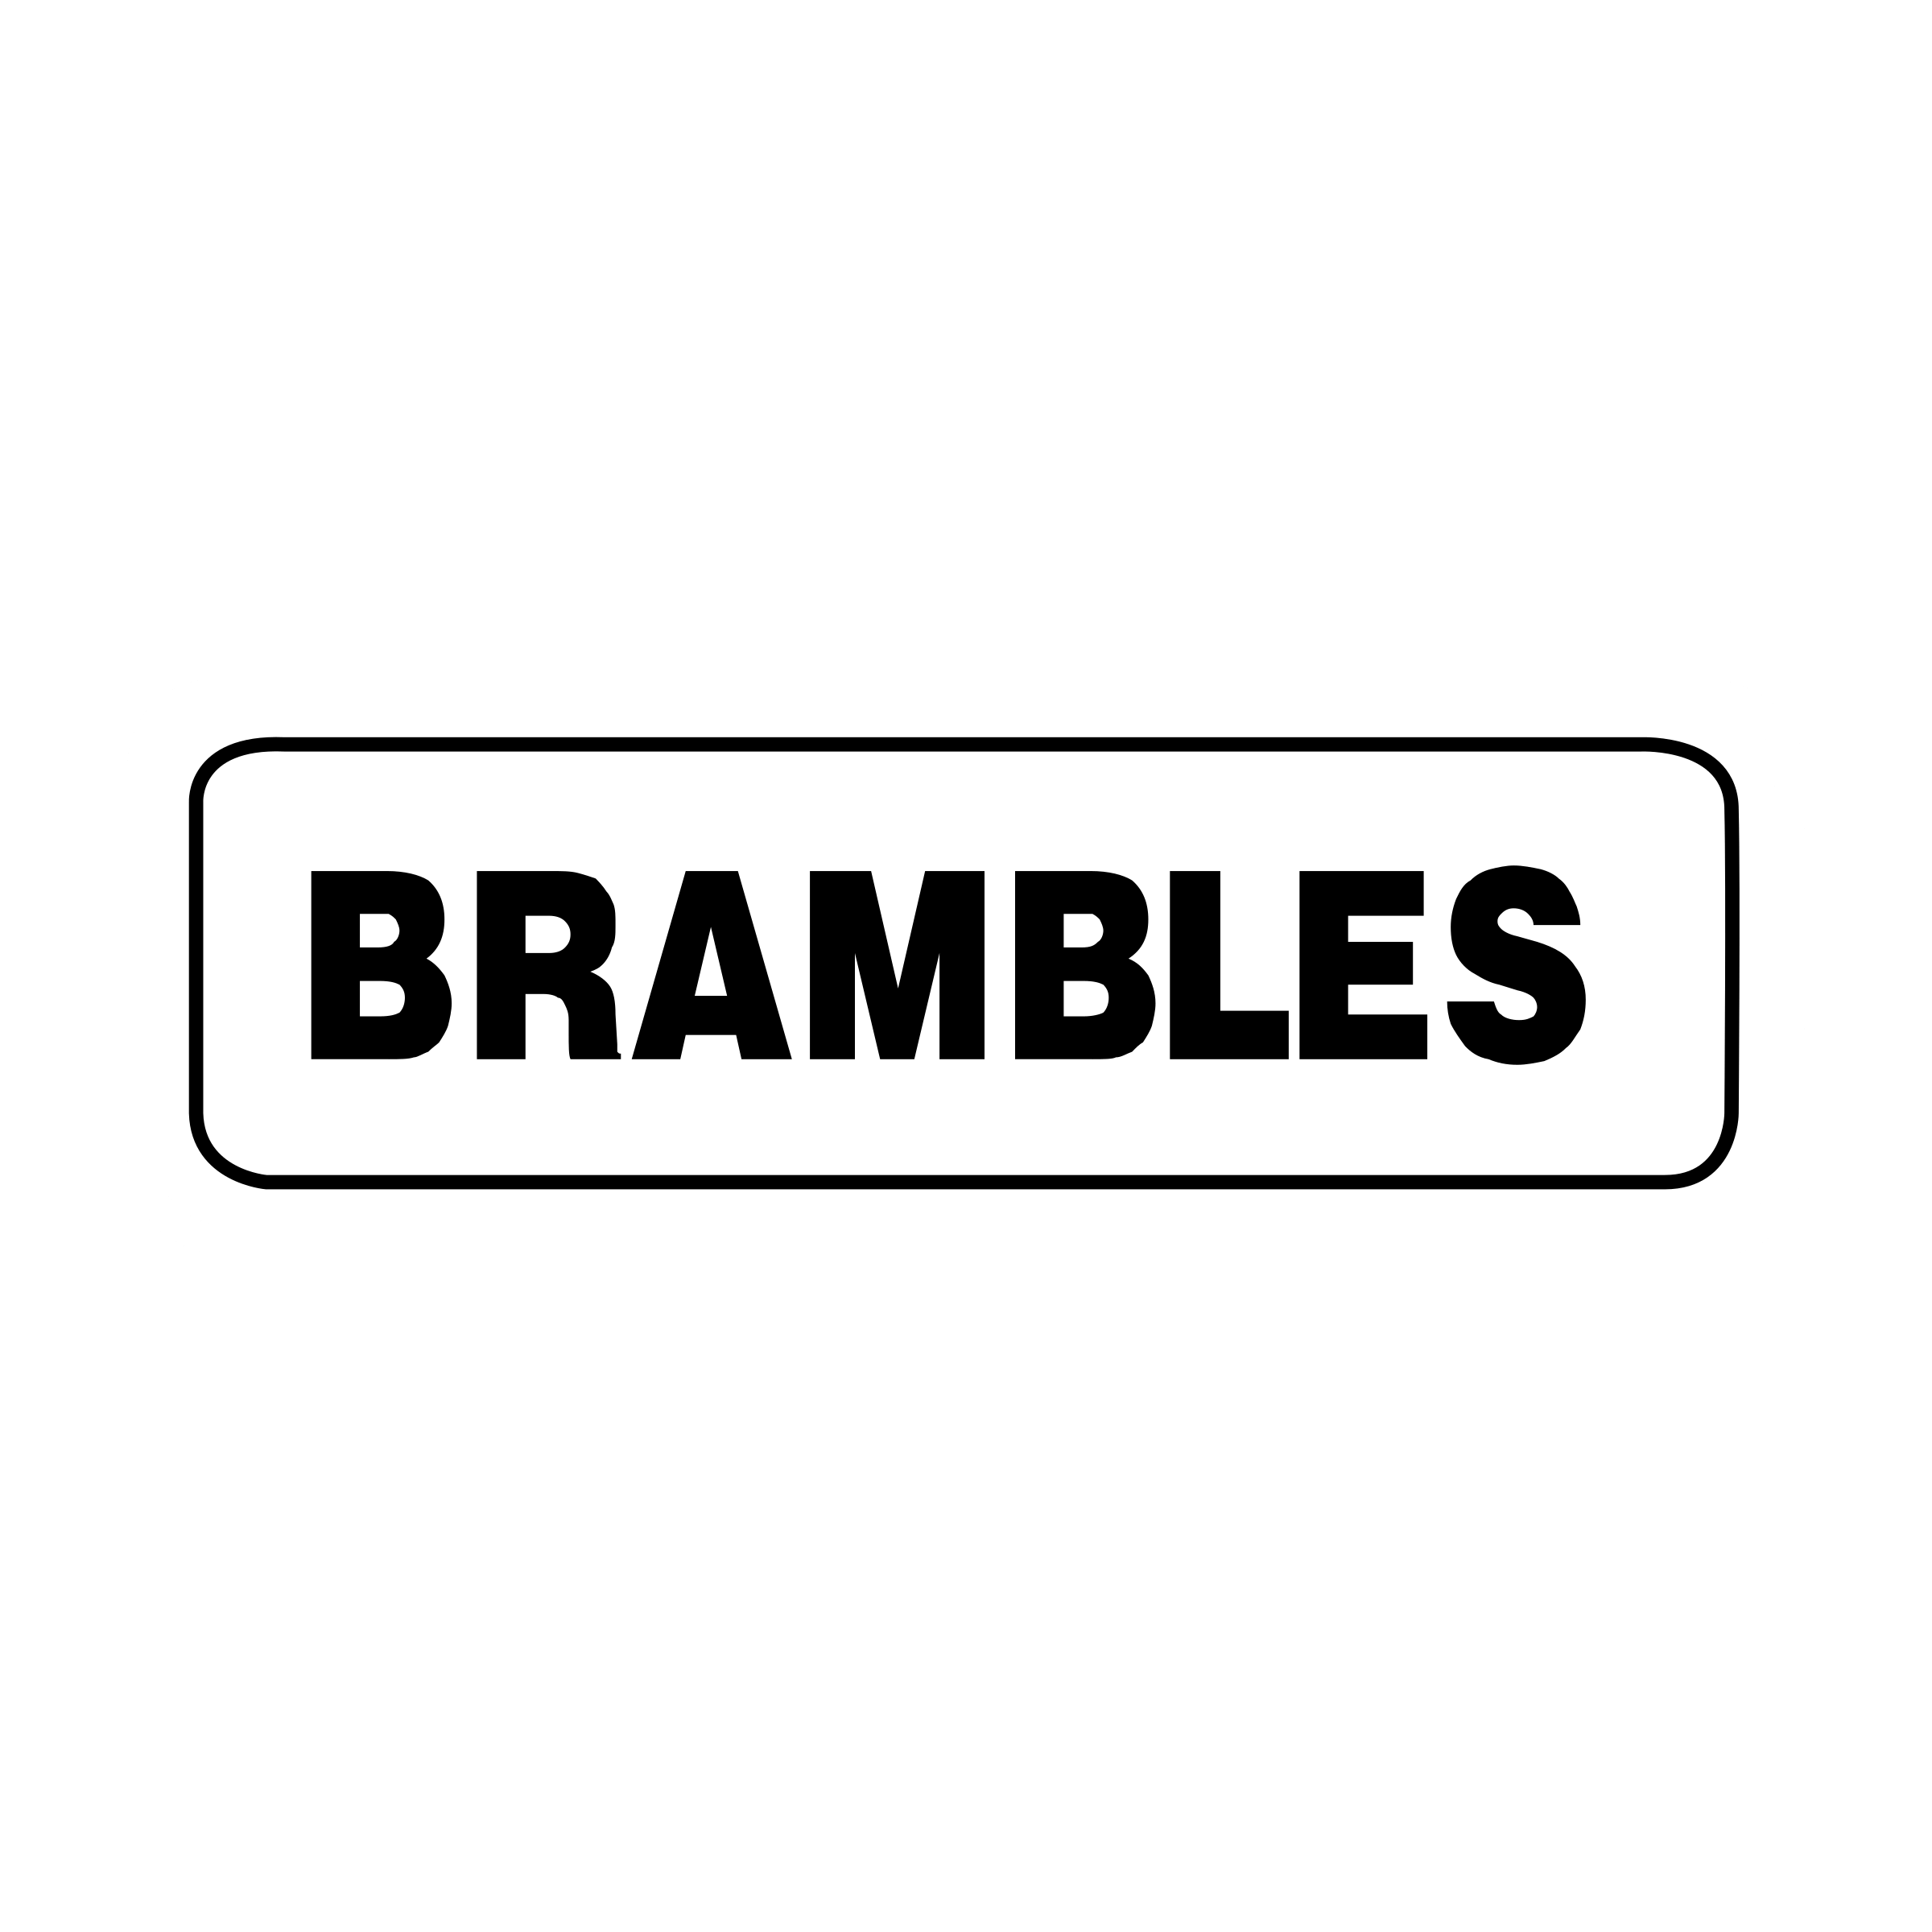 Brambles Logo - Brambles Logo PNG Transparent & SVG Vector - Freebie Supply